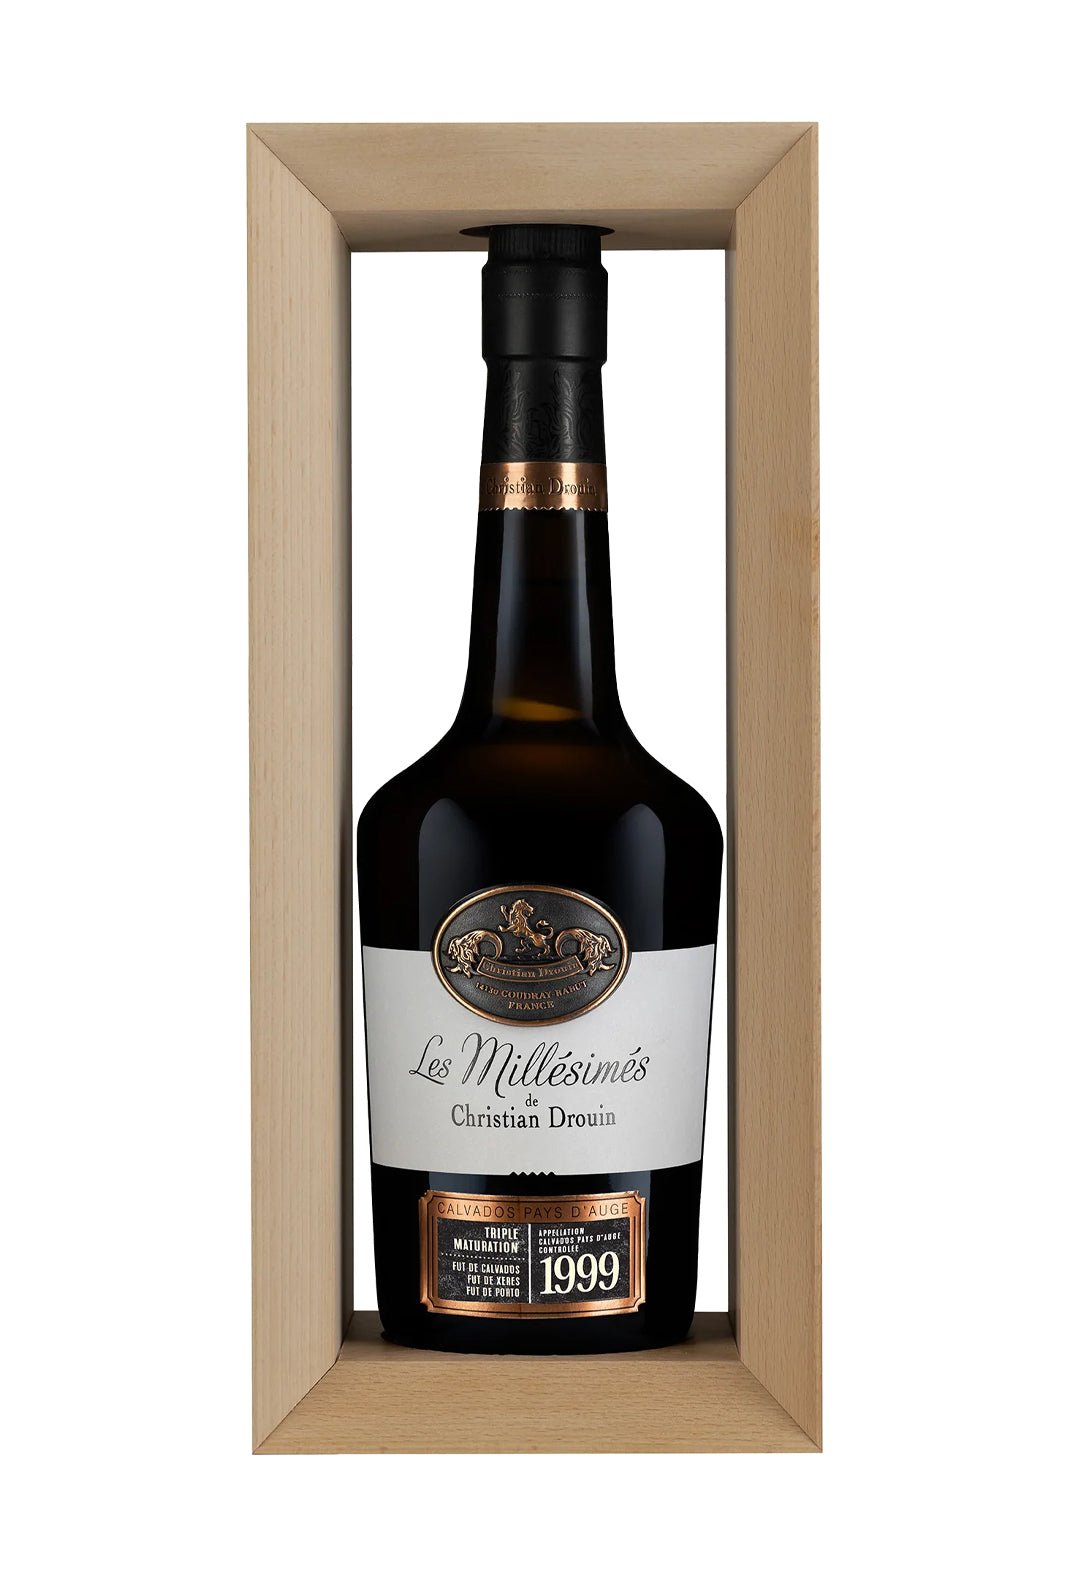 Christian Drouin Calvados Vintage 1999 42% 700ml | Liquor & Spirits | Shop online at Spirits of France